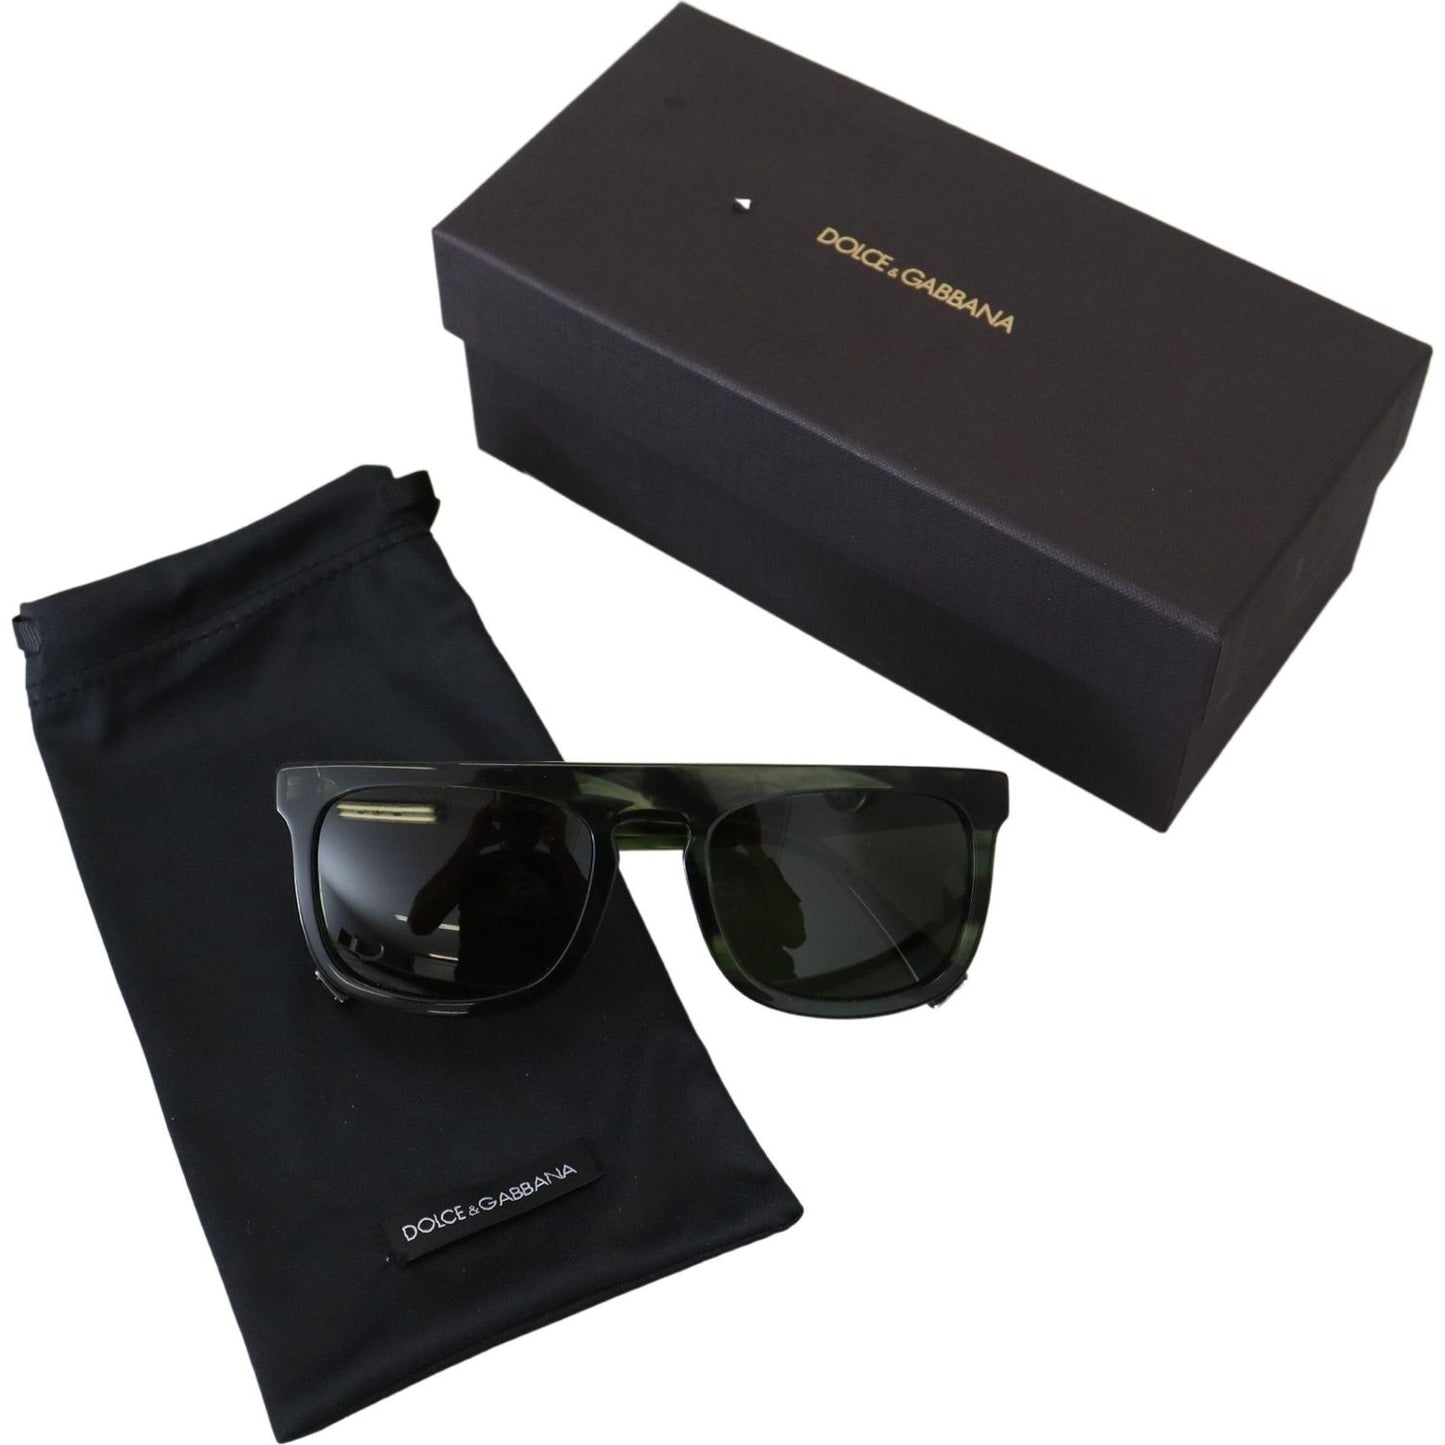 Dolce & GabbanaChic Green UV Protection SunglassesMcRichard Designer Brands£169.00